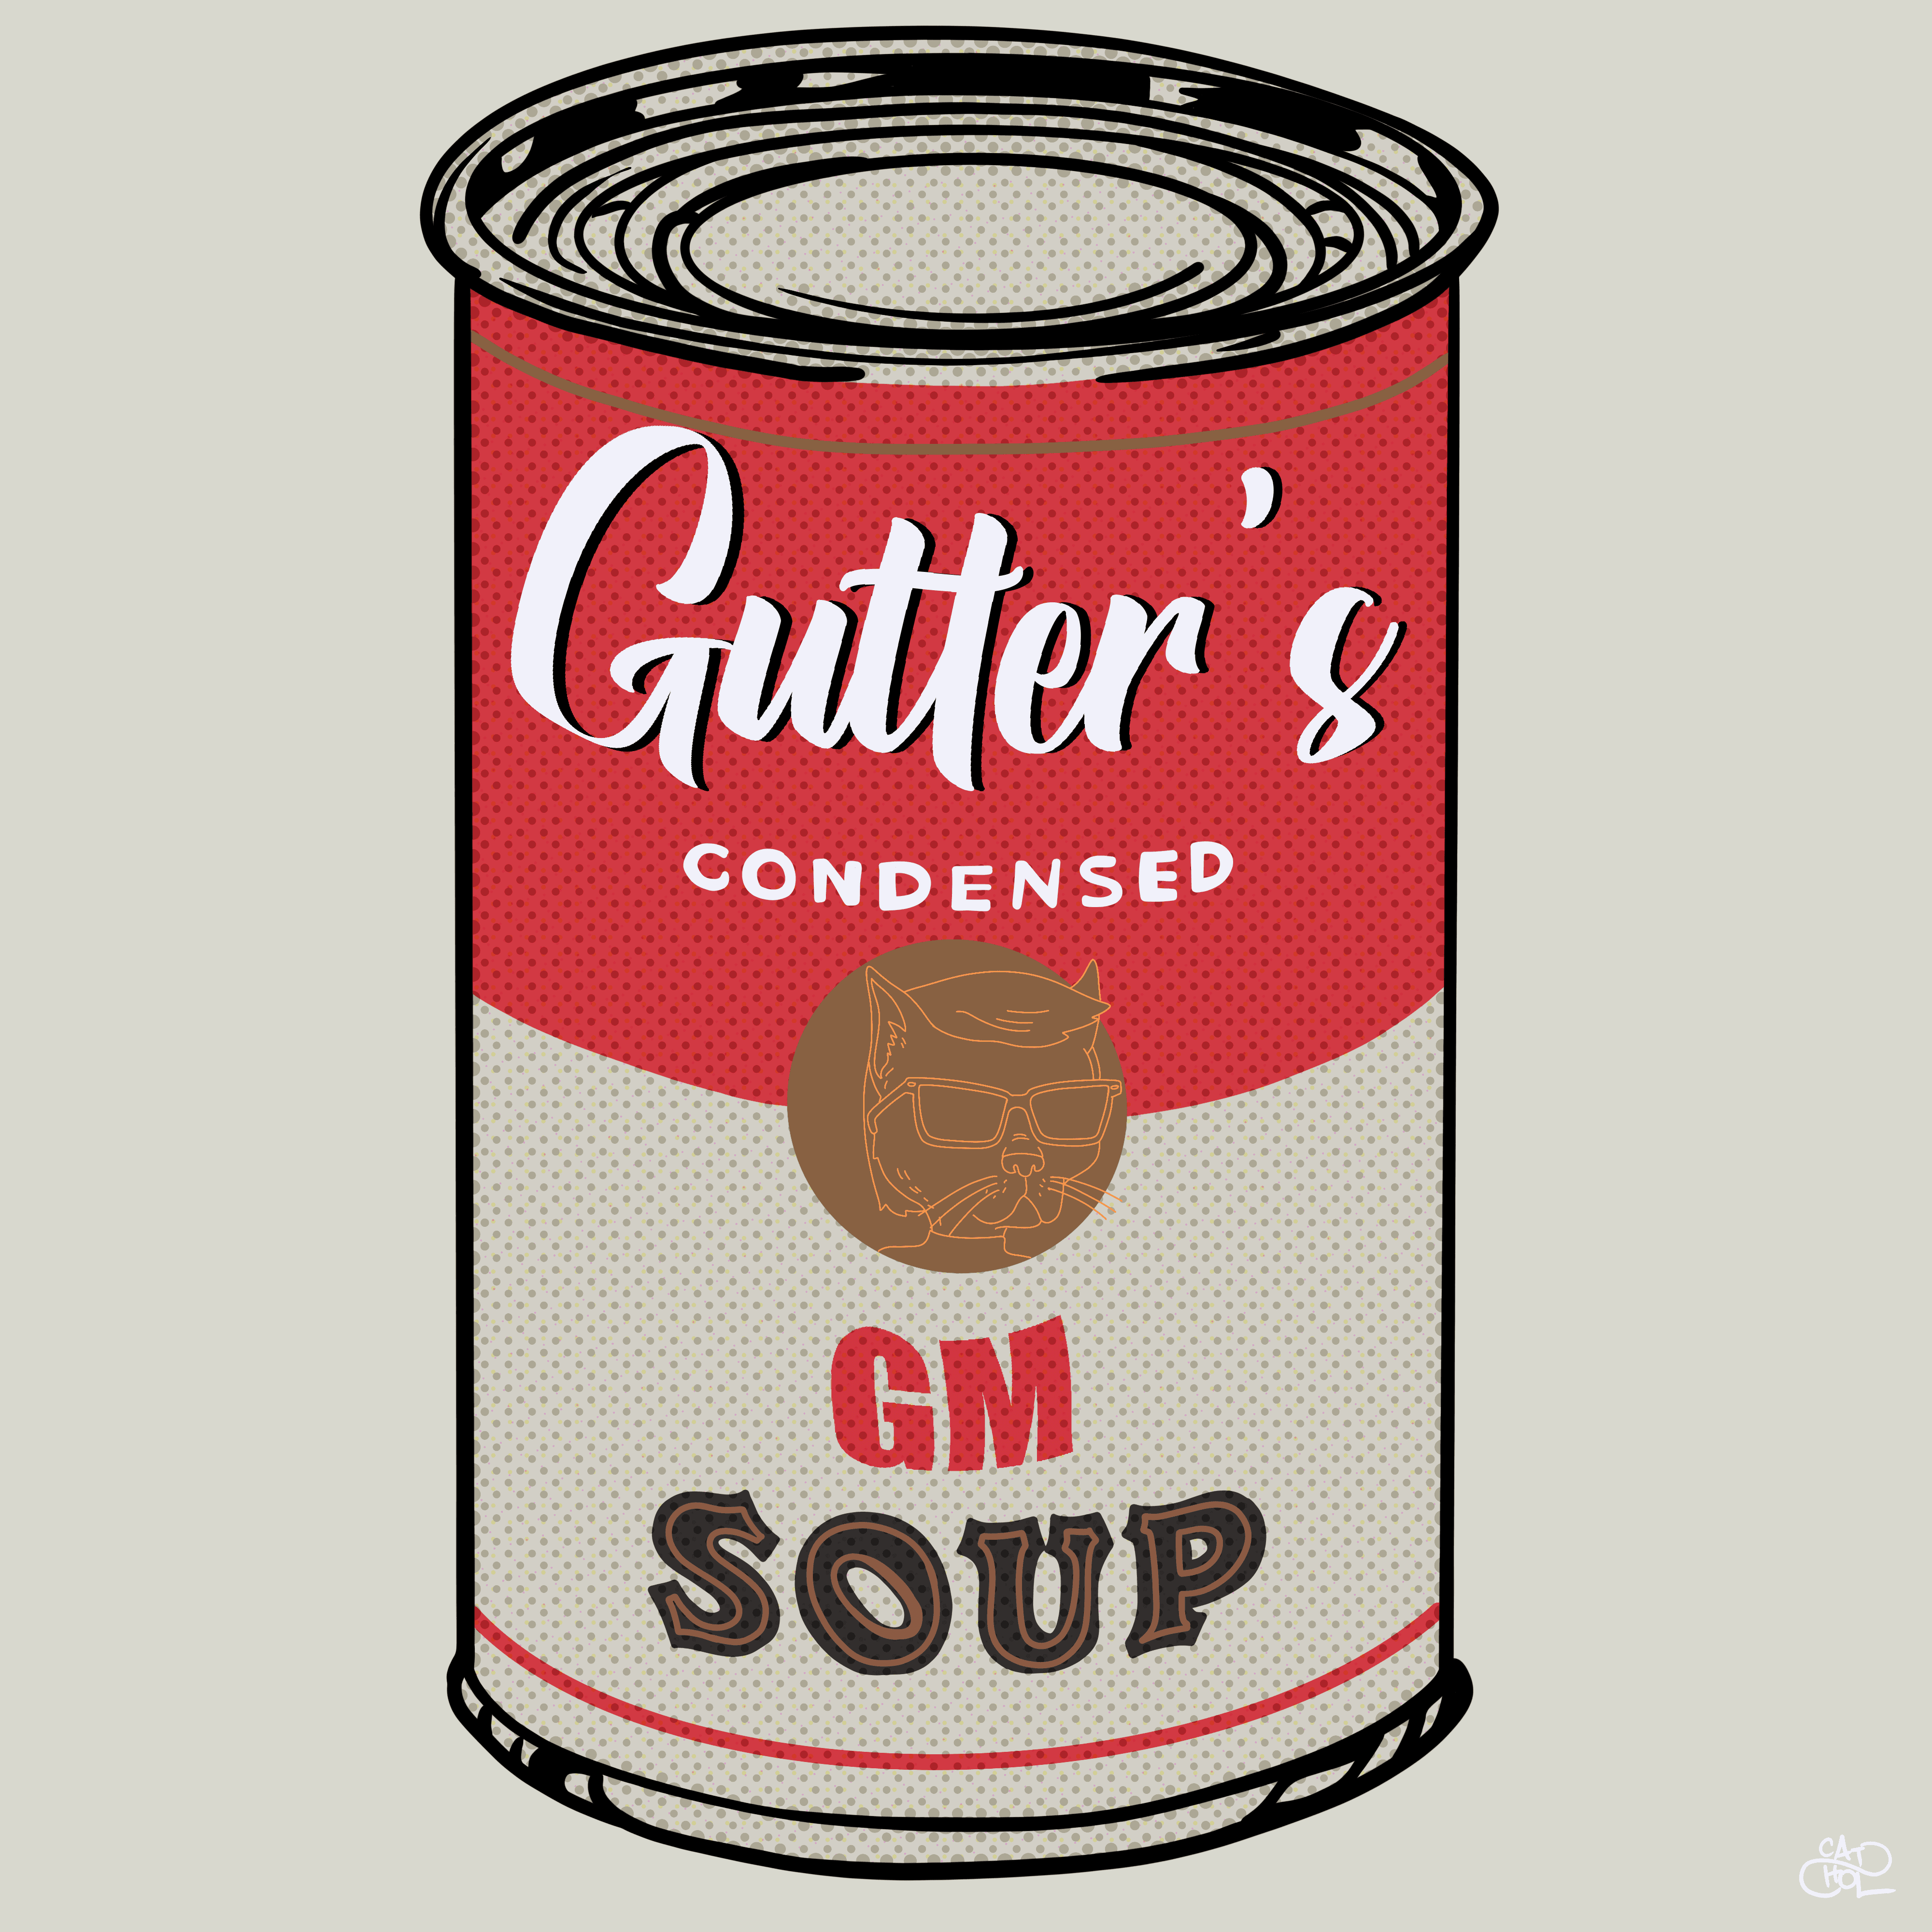 GM Soup